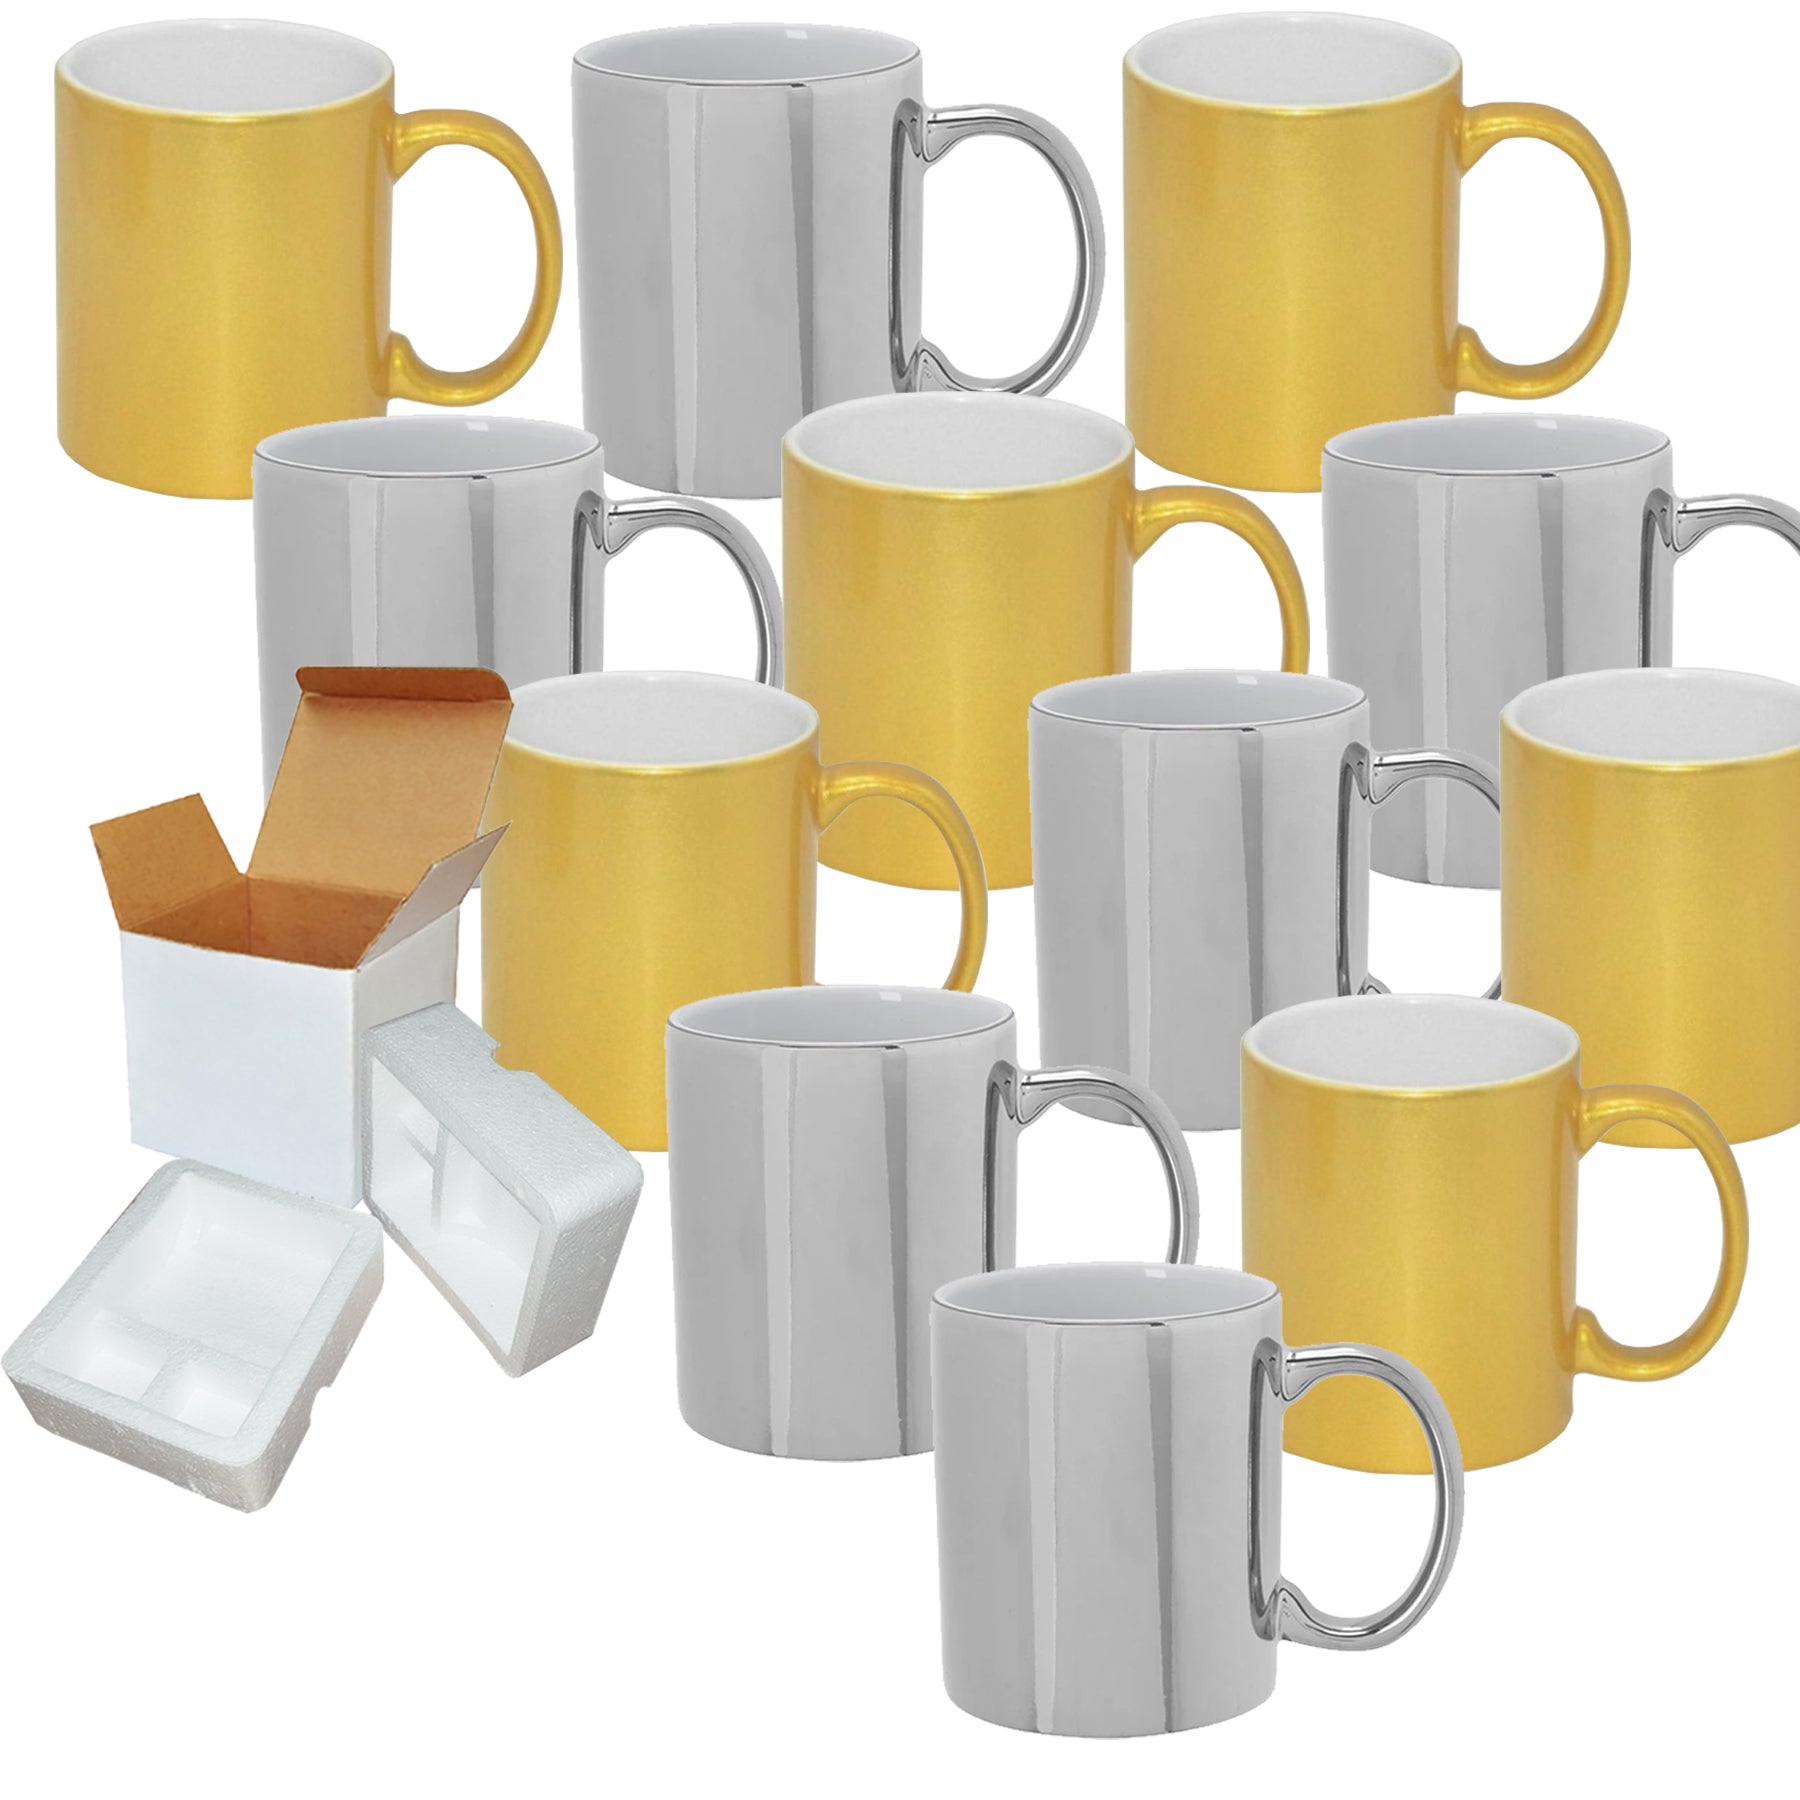 Premium Ceramic Sublimation Mugs - 11 oz. White Coffee Mugs for Custom  Printing - Includes White Mug Gift Boxes - Mugsie